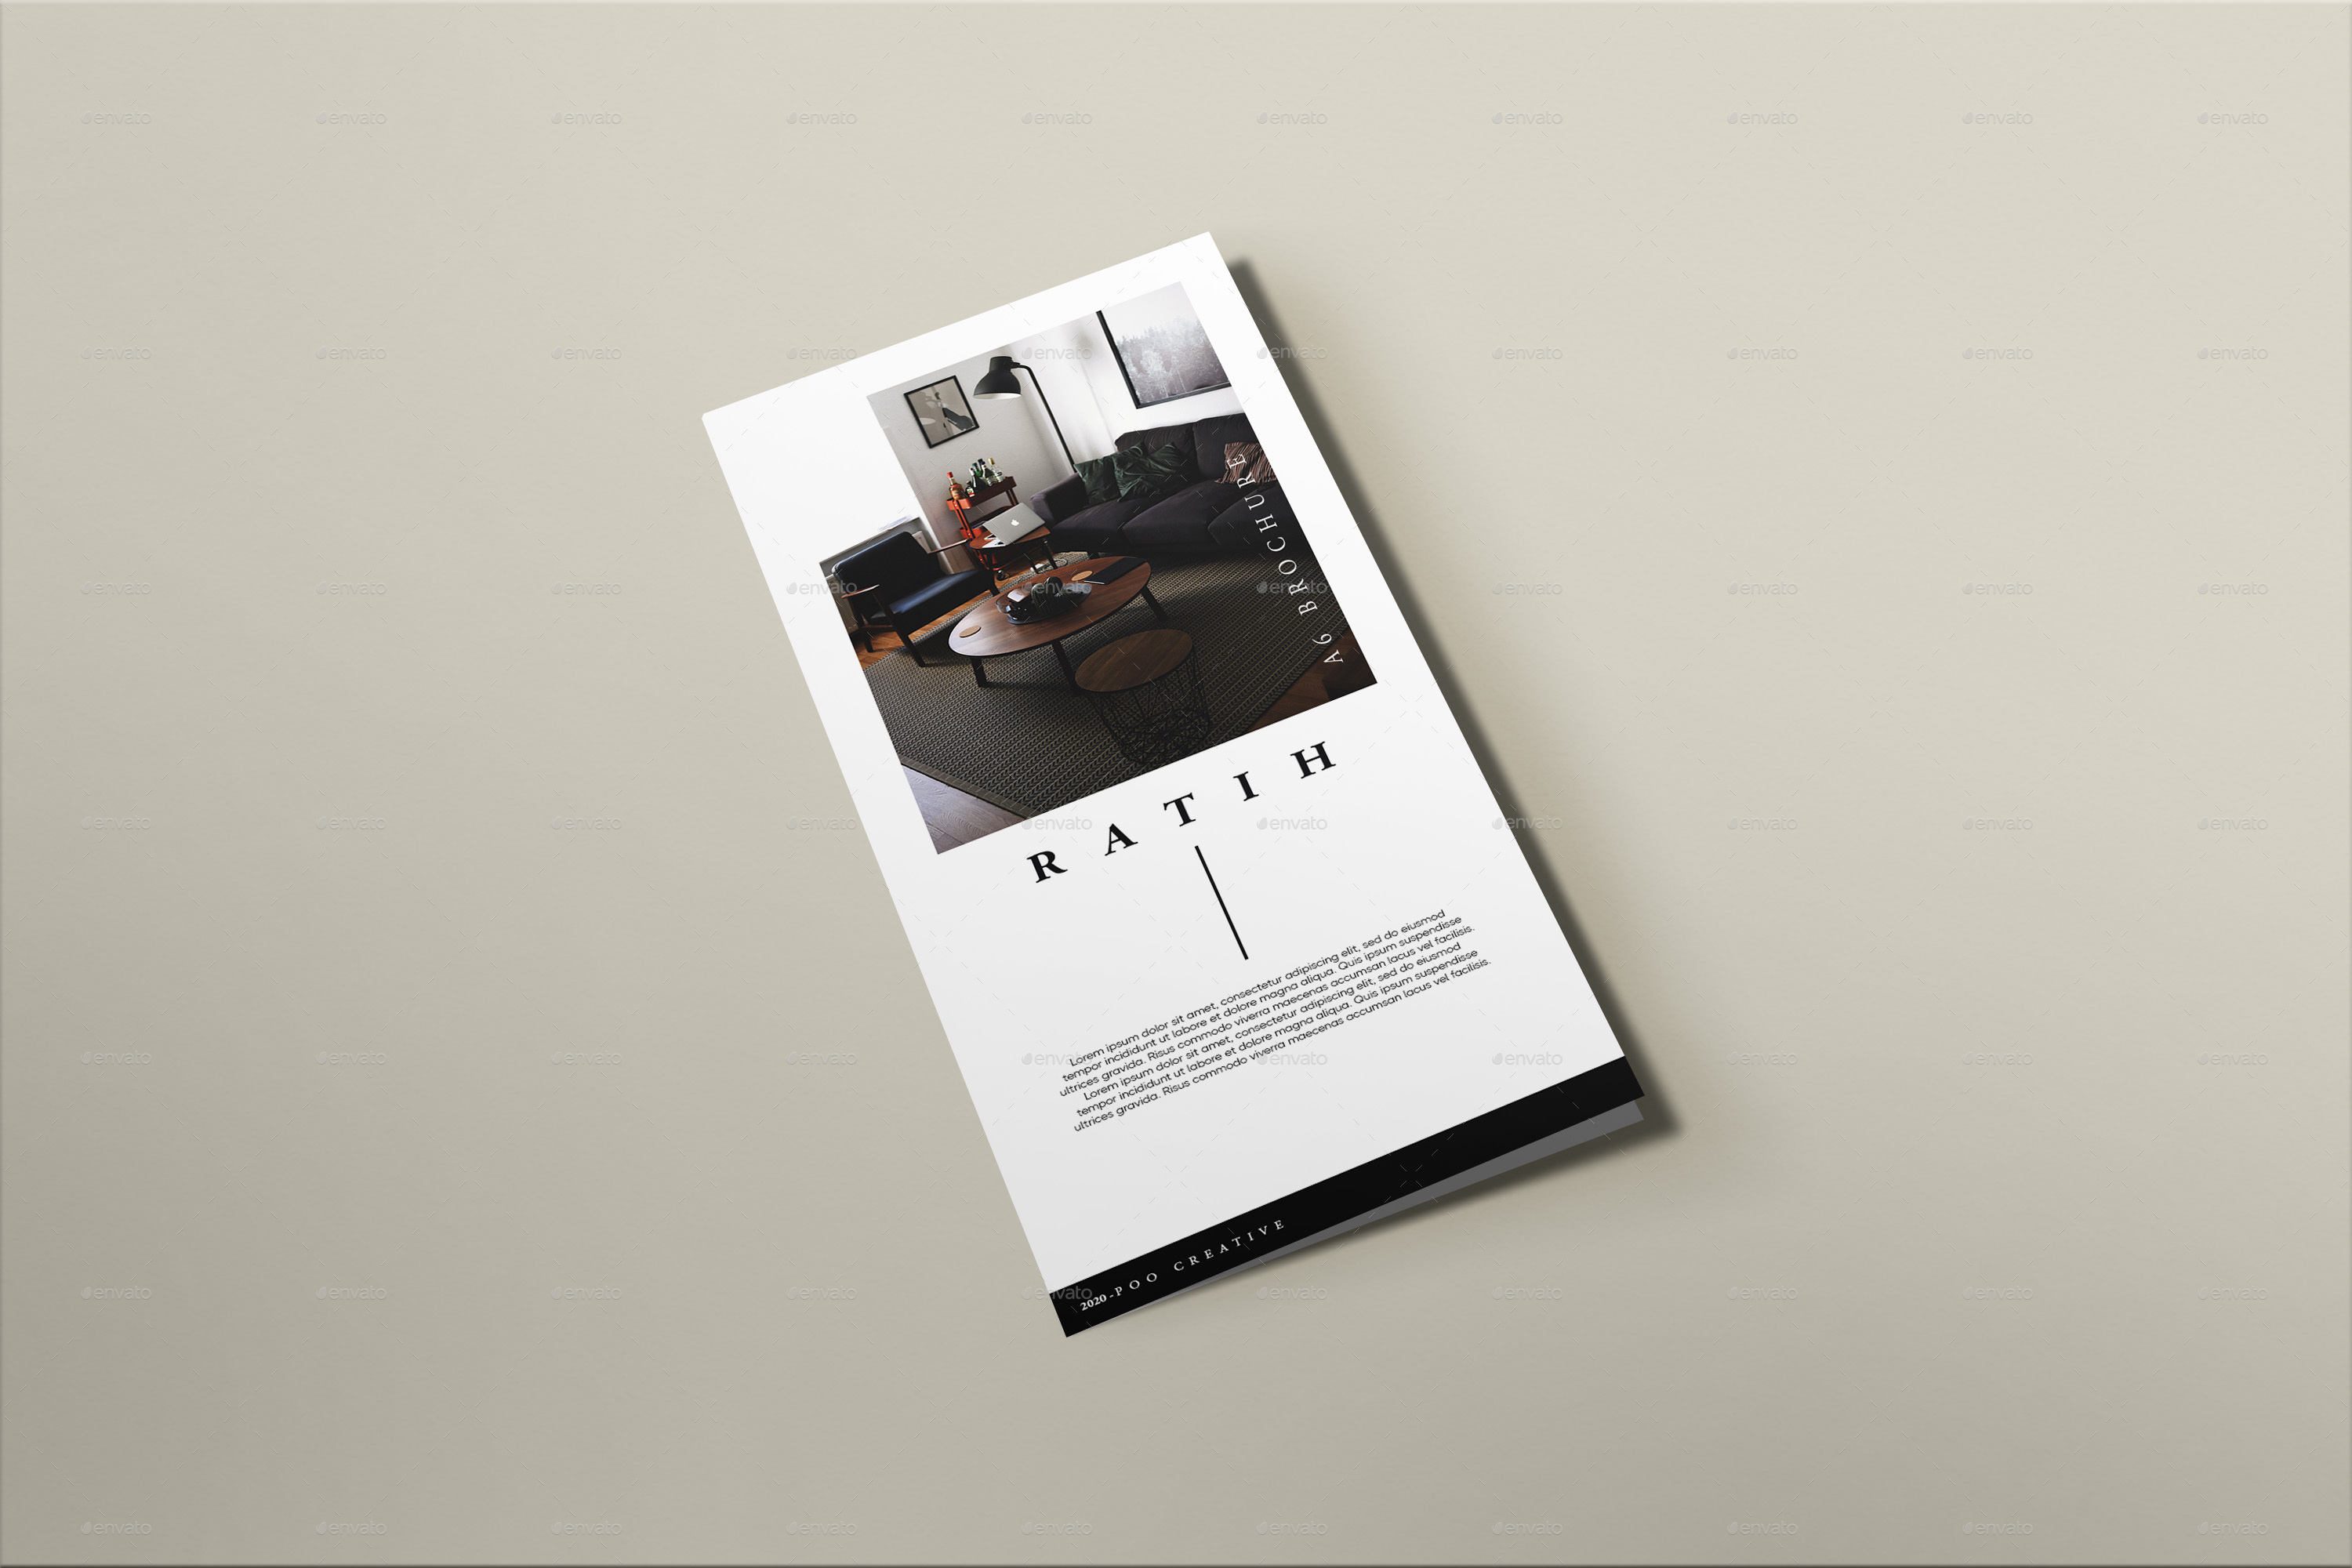 Ratih - DL Bifold Brochure Mockup